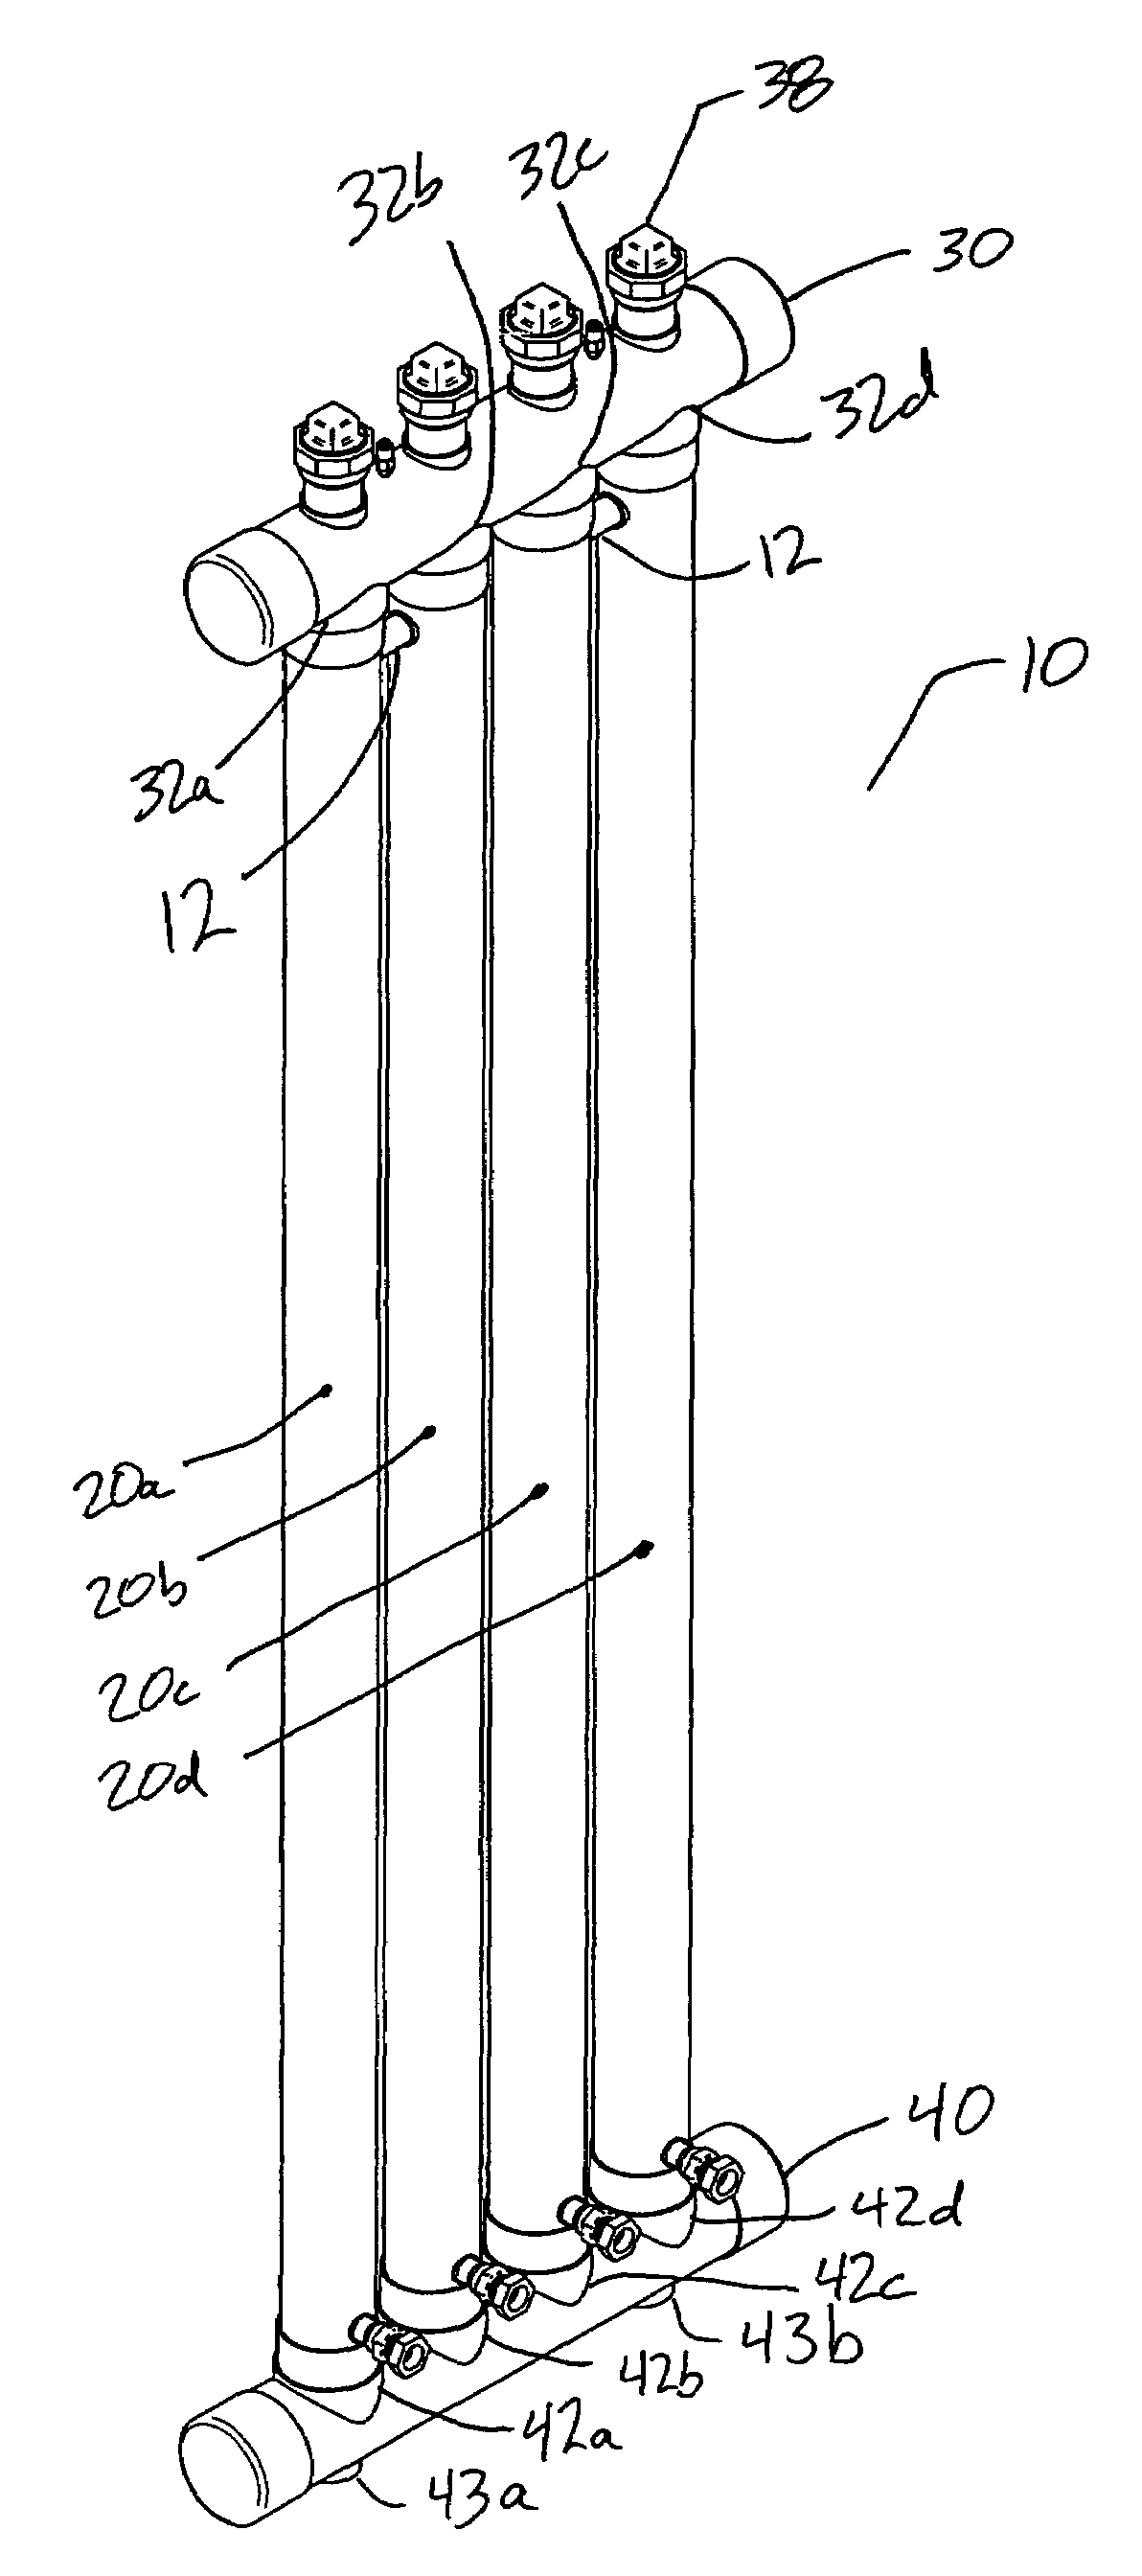 Multi-pass parallel-tube heat exchanger